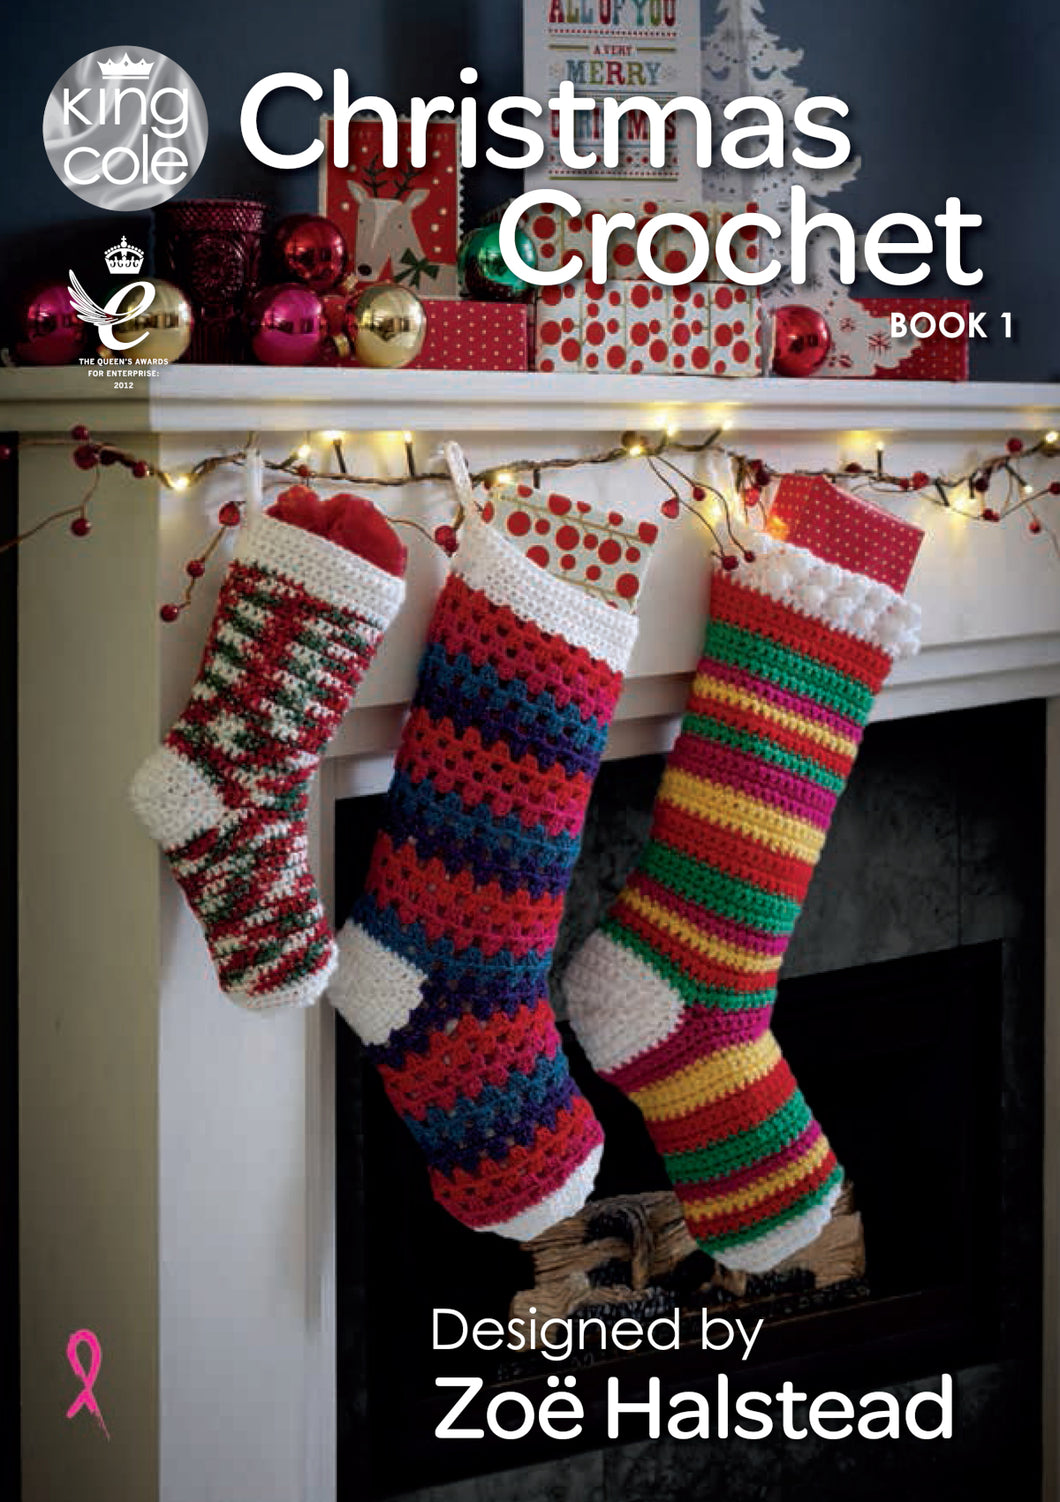 https://images.esellerpro.com/2278/I/119/105/king-cole-christmas-crochet-book-1-image-1.jpg